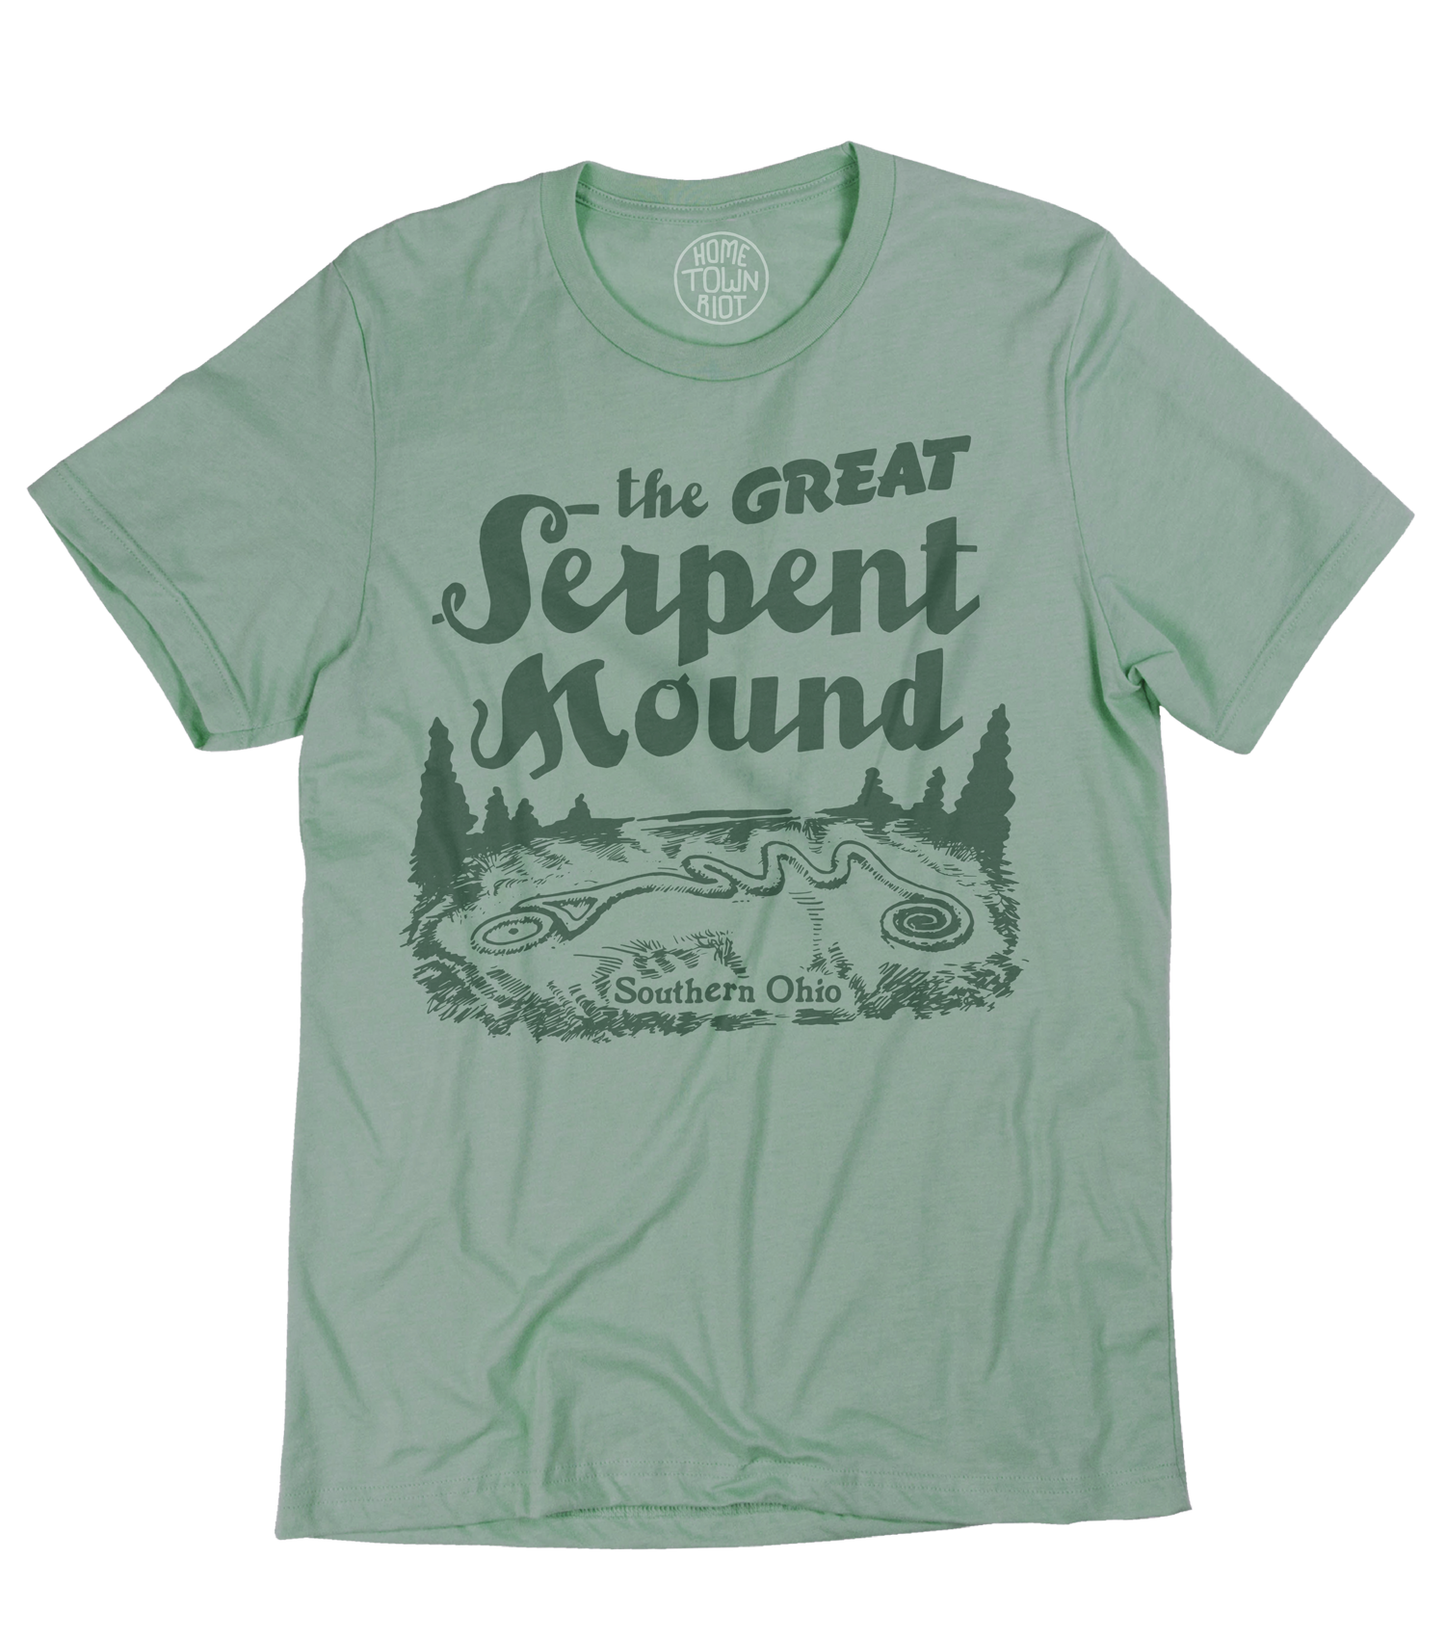 Great Serpent Mound Ohio Shirt